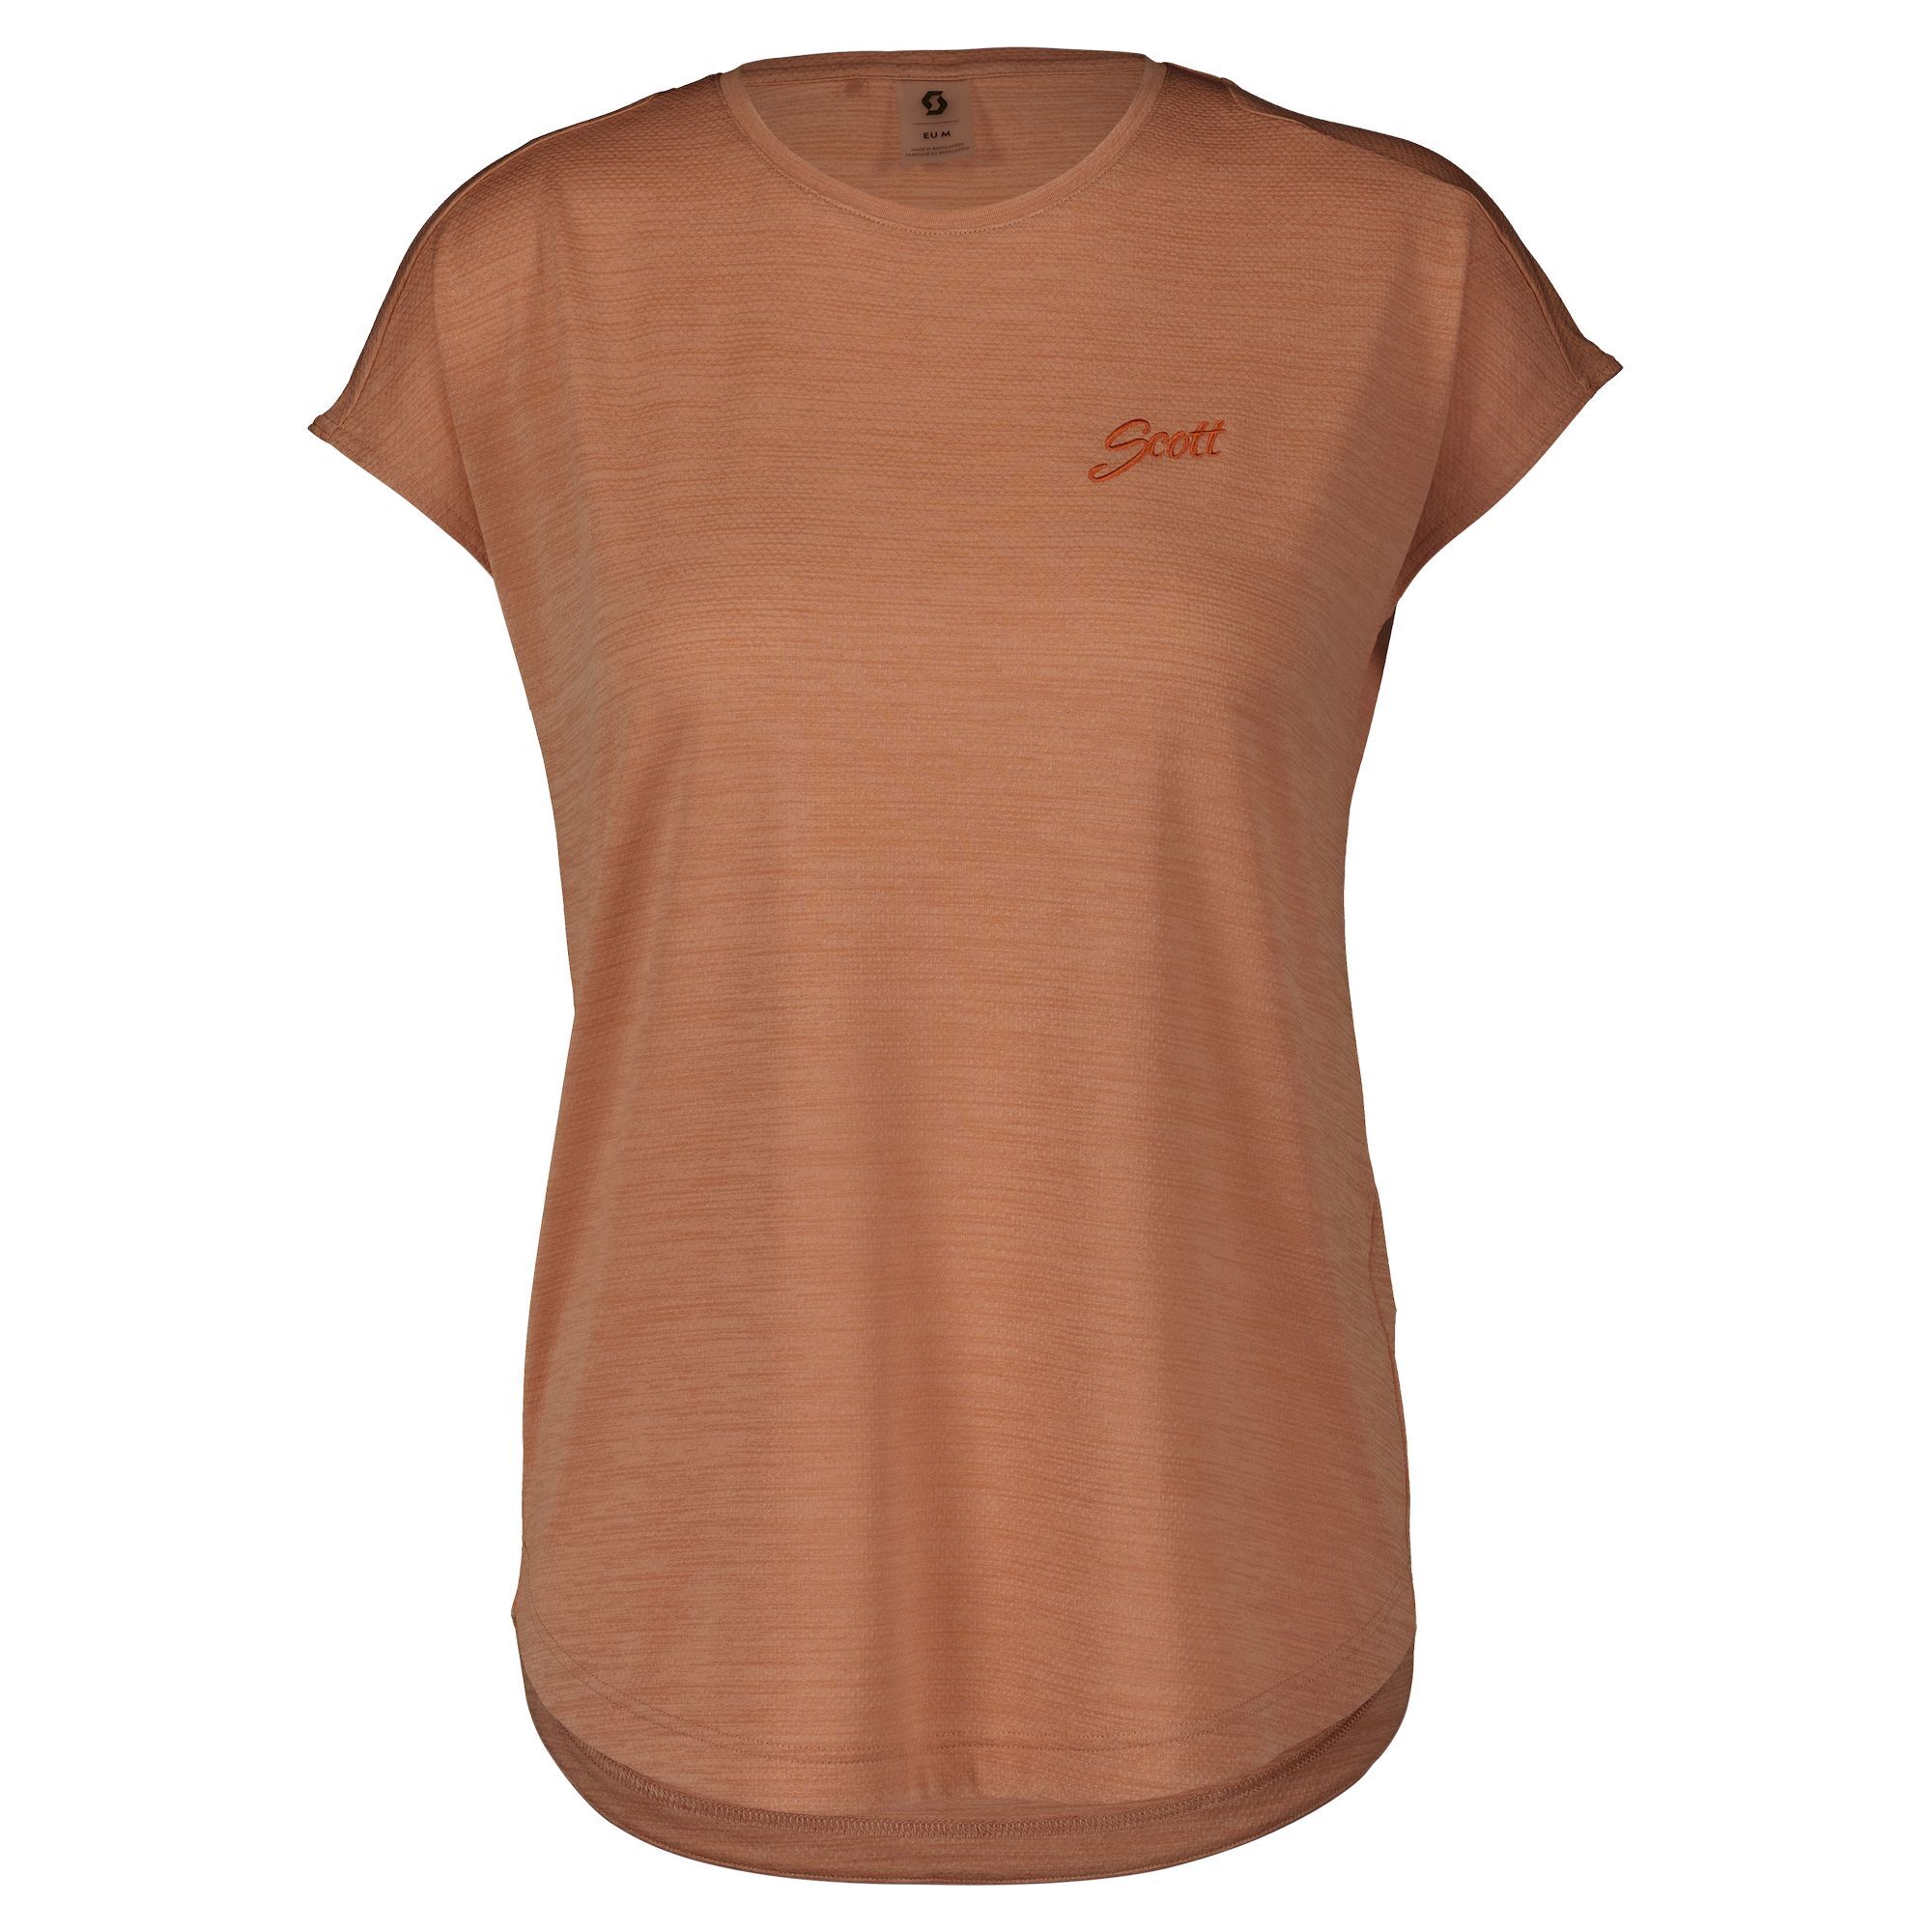 Scott Defined - T-shirt - Women's | Hardloop